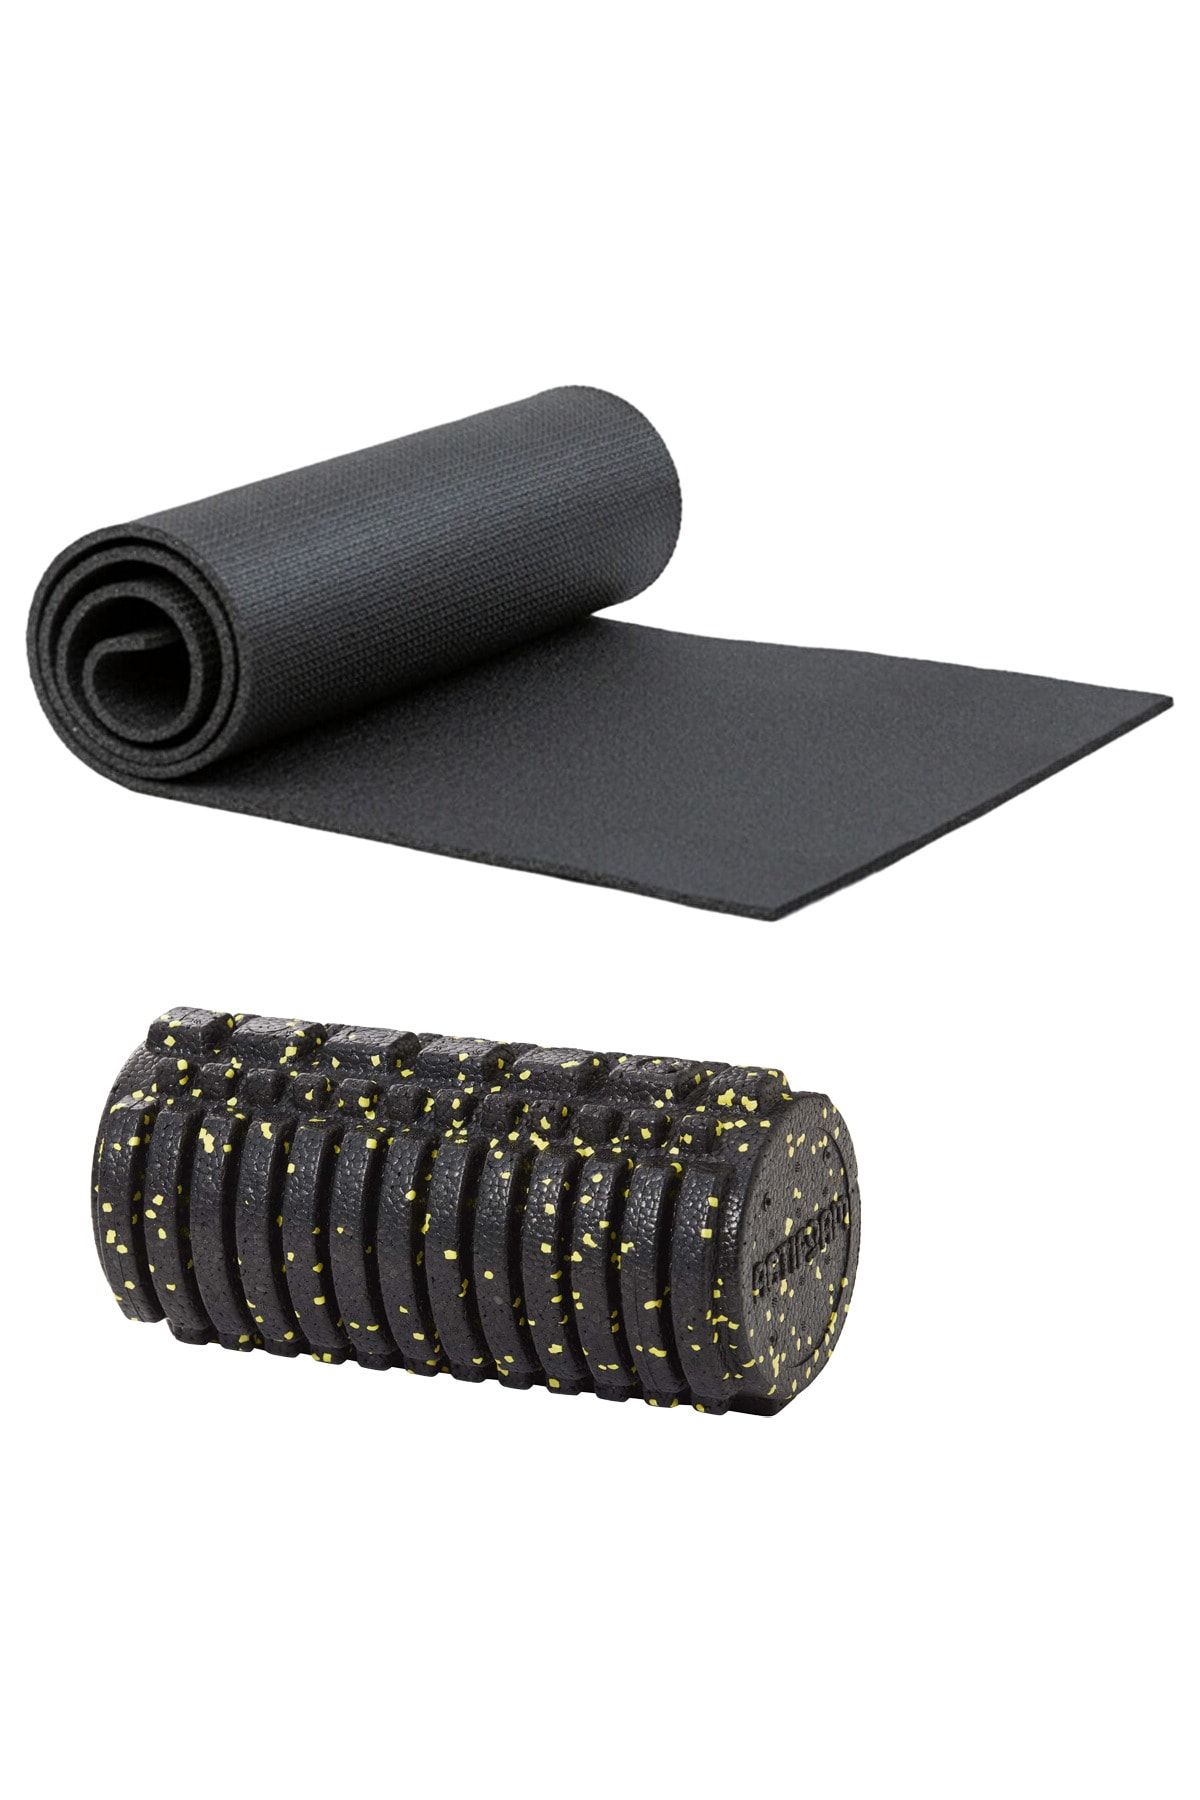 Tosima 7mm Pilates Minderi Ve Foam Roller Seti Egzersiz Seti Yoga Seti